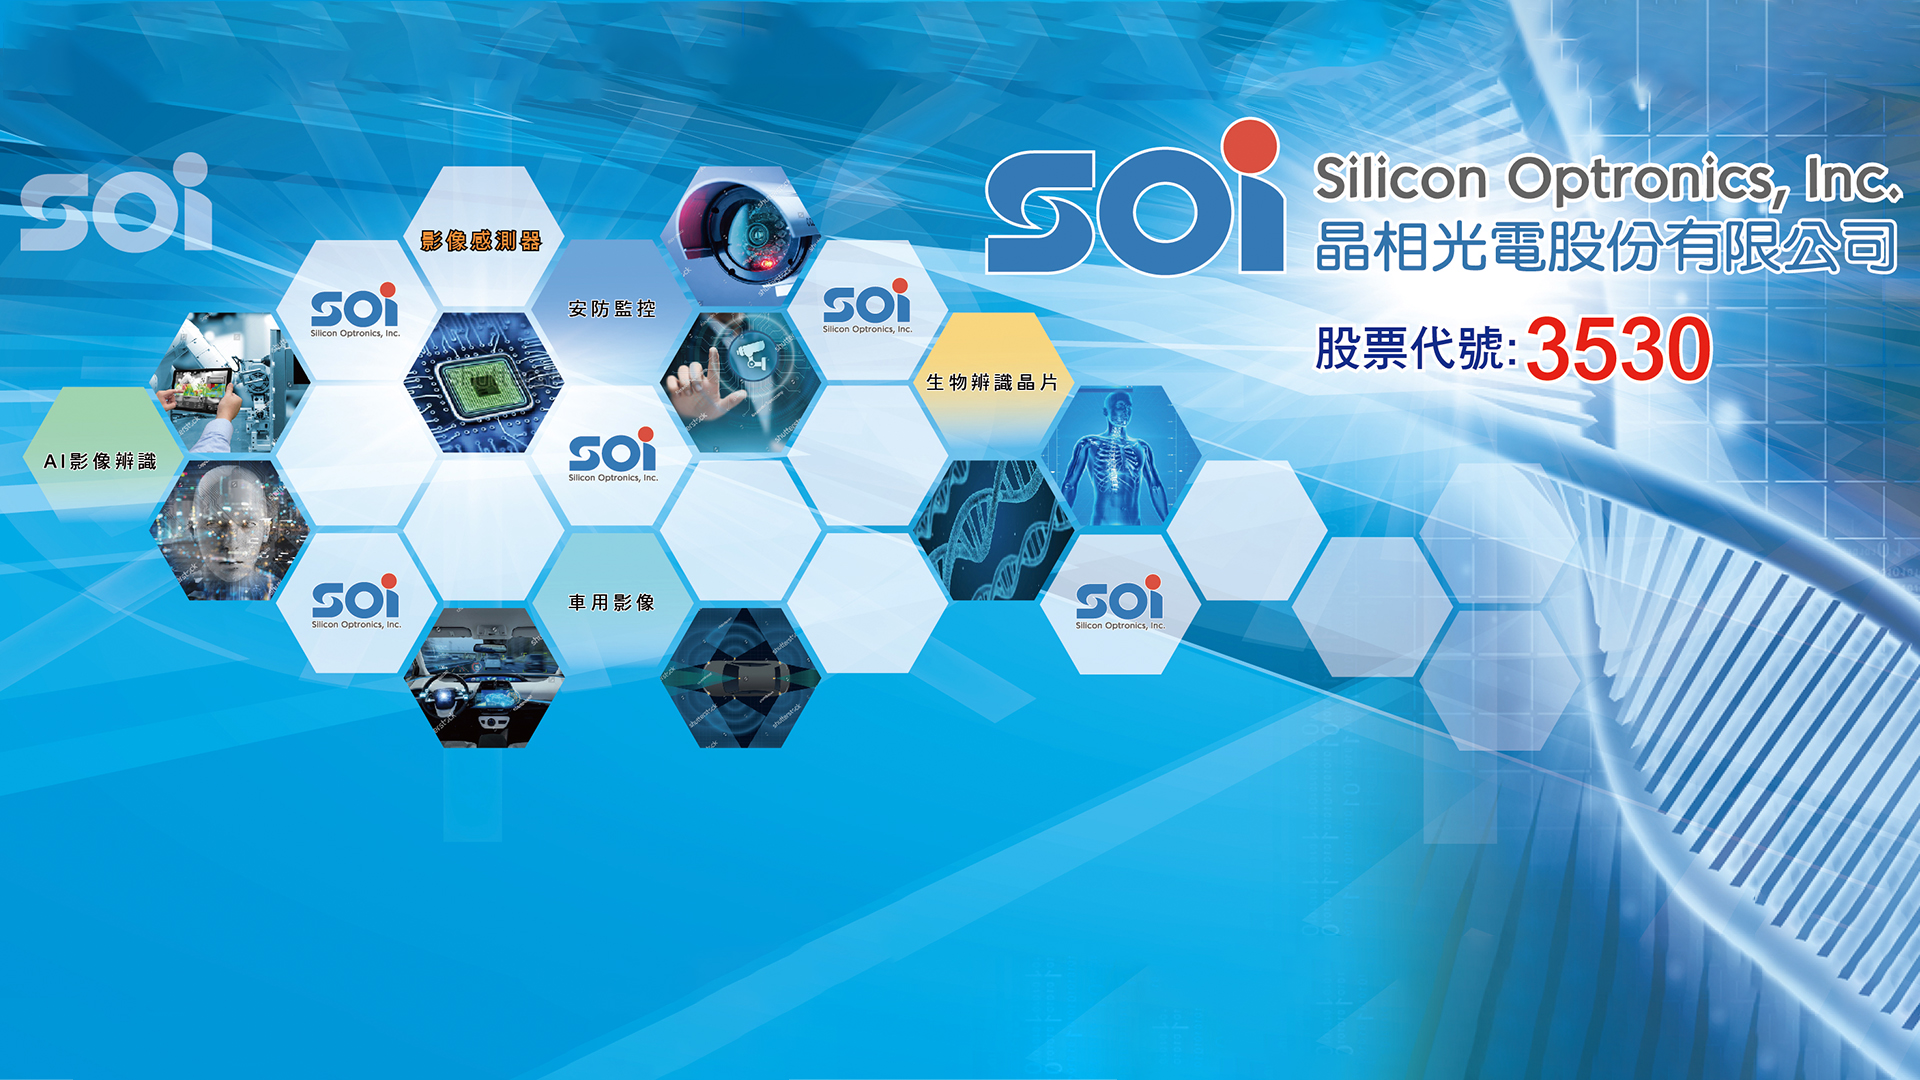 Silicon Optronics, Inc.